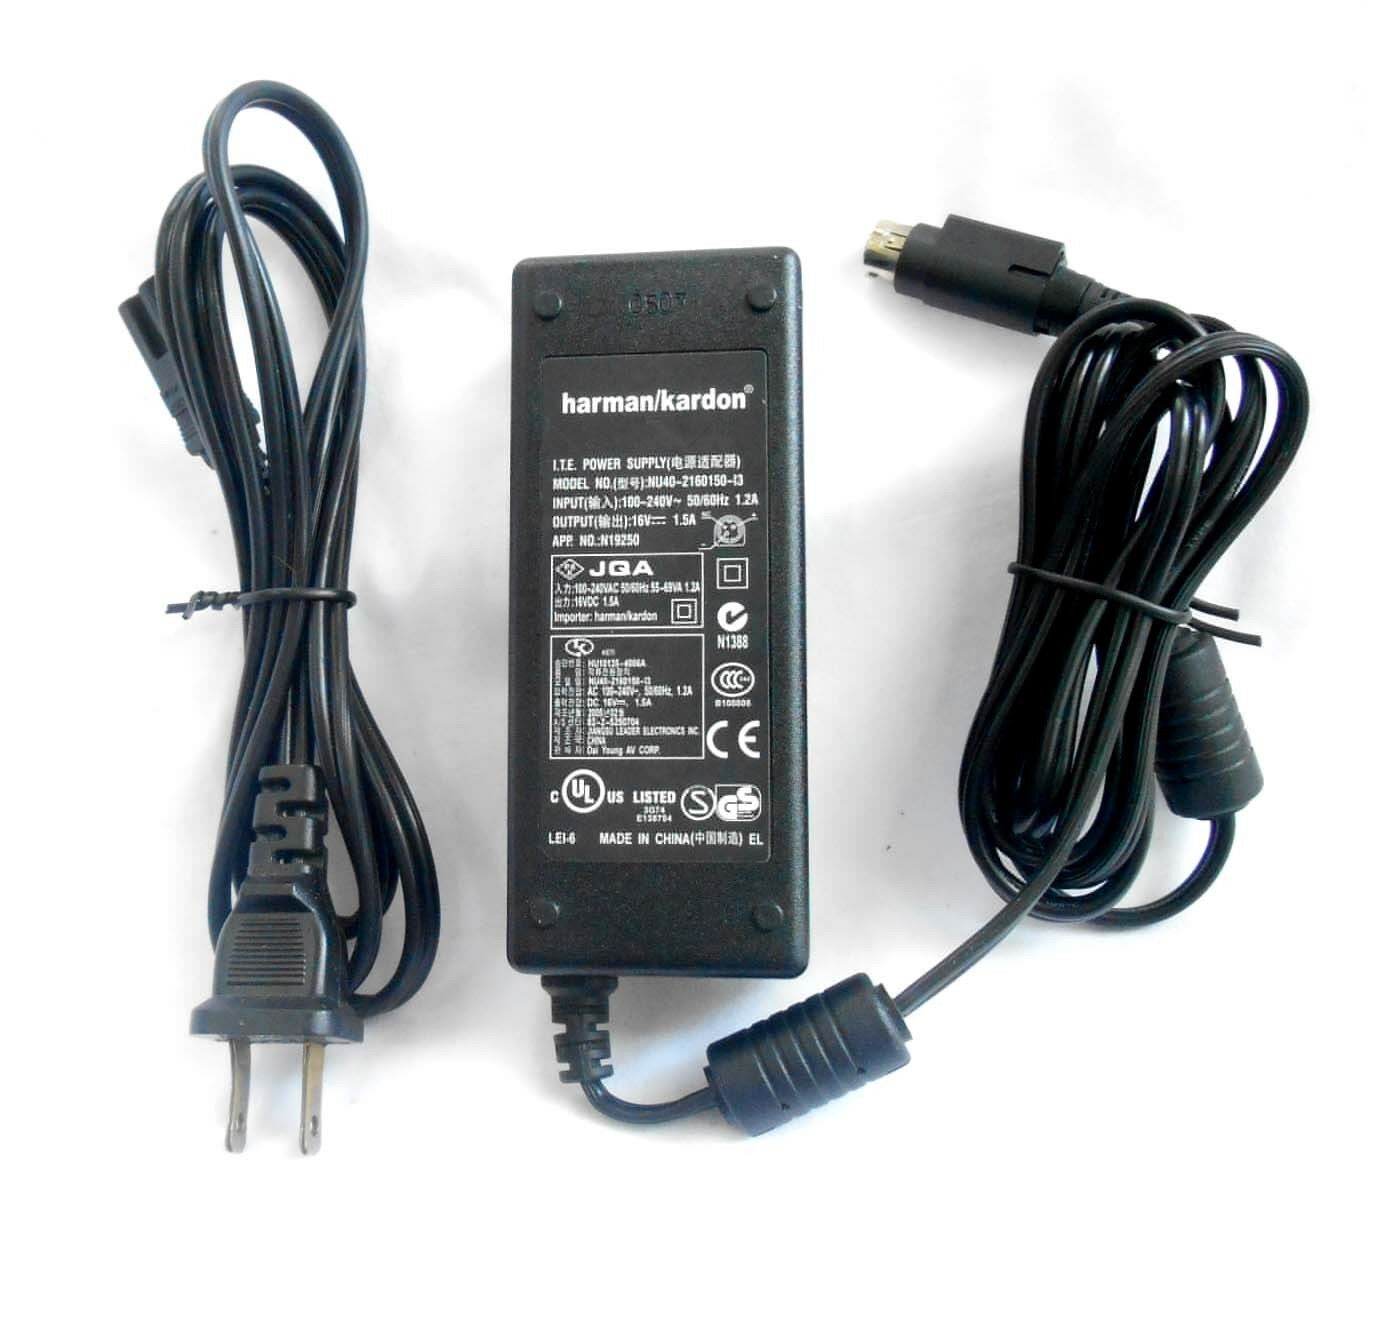 Harman-Kardon NU40-2160150-13 AC Adapter Power Supply Cord Cable Charger Genuine Original